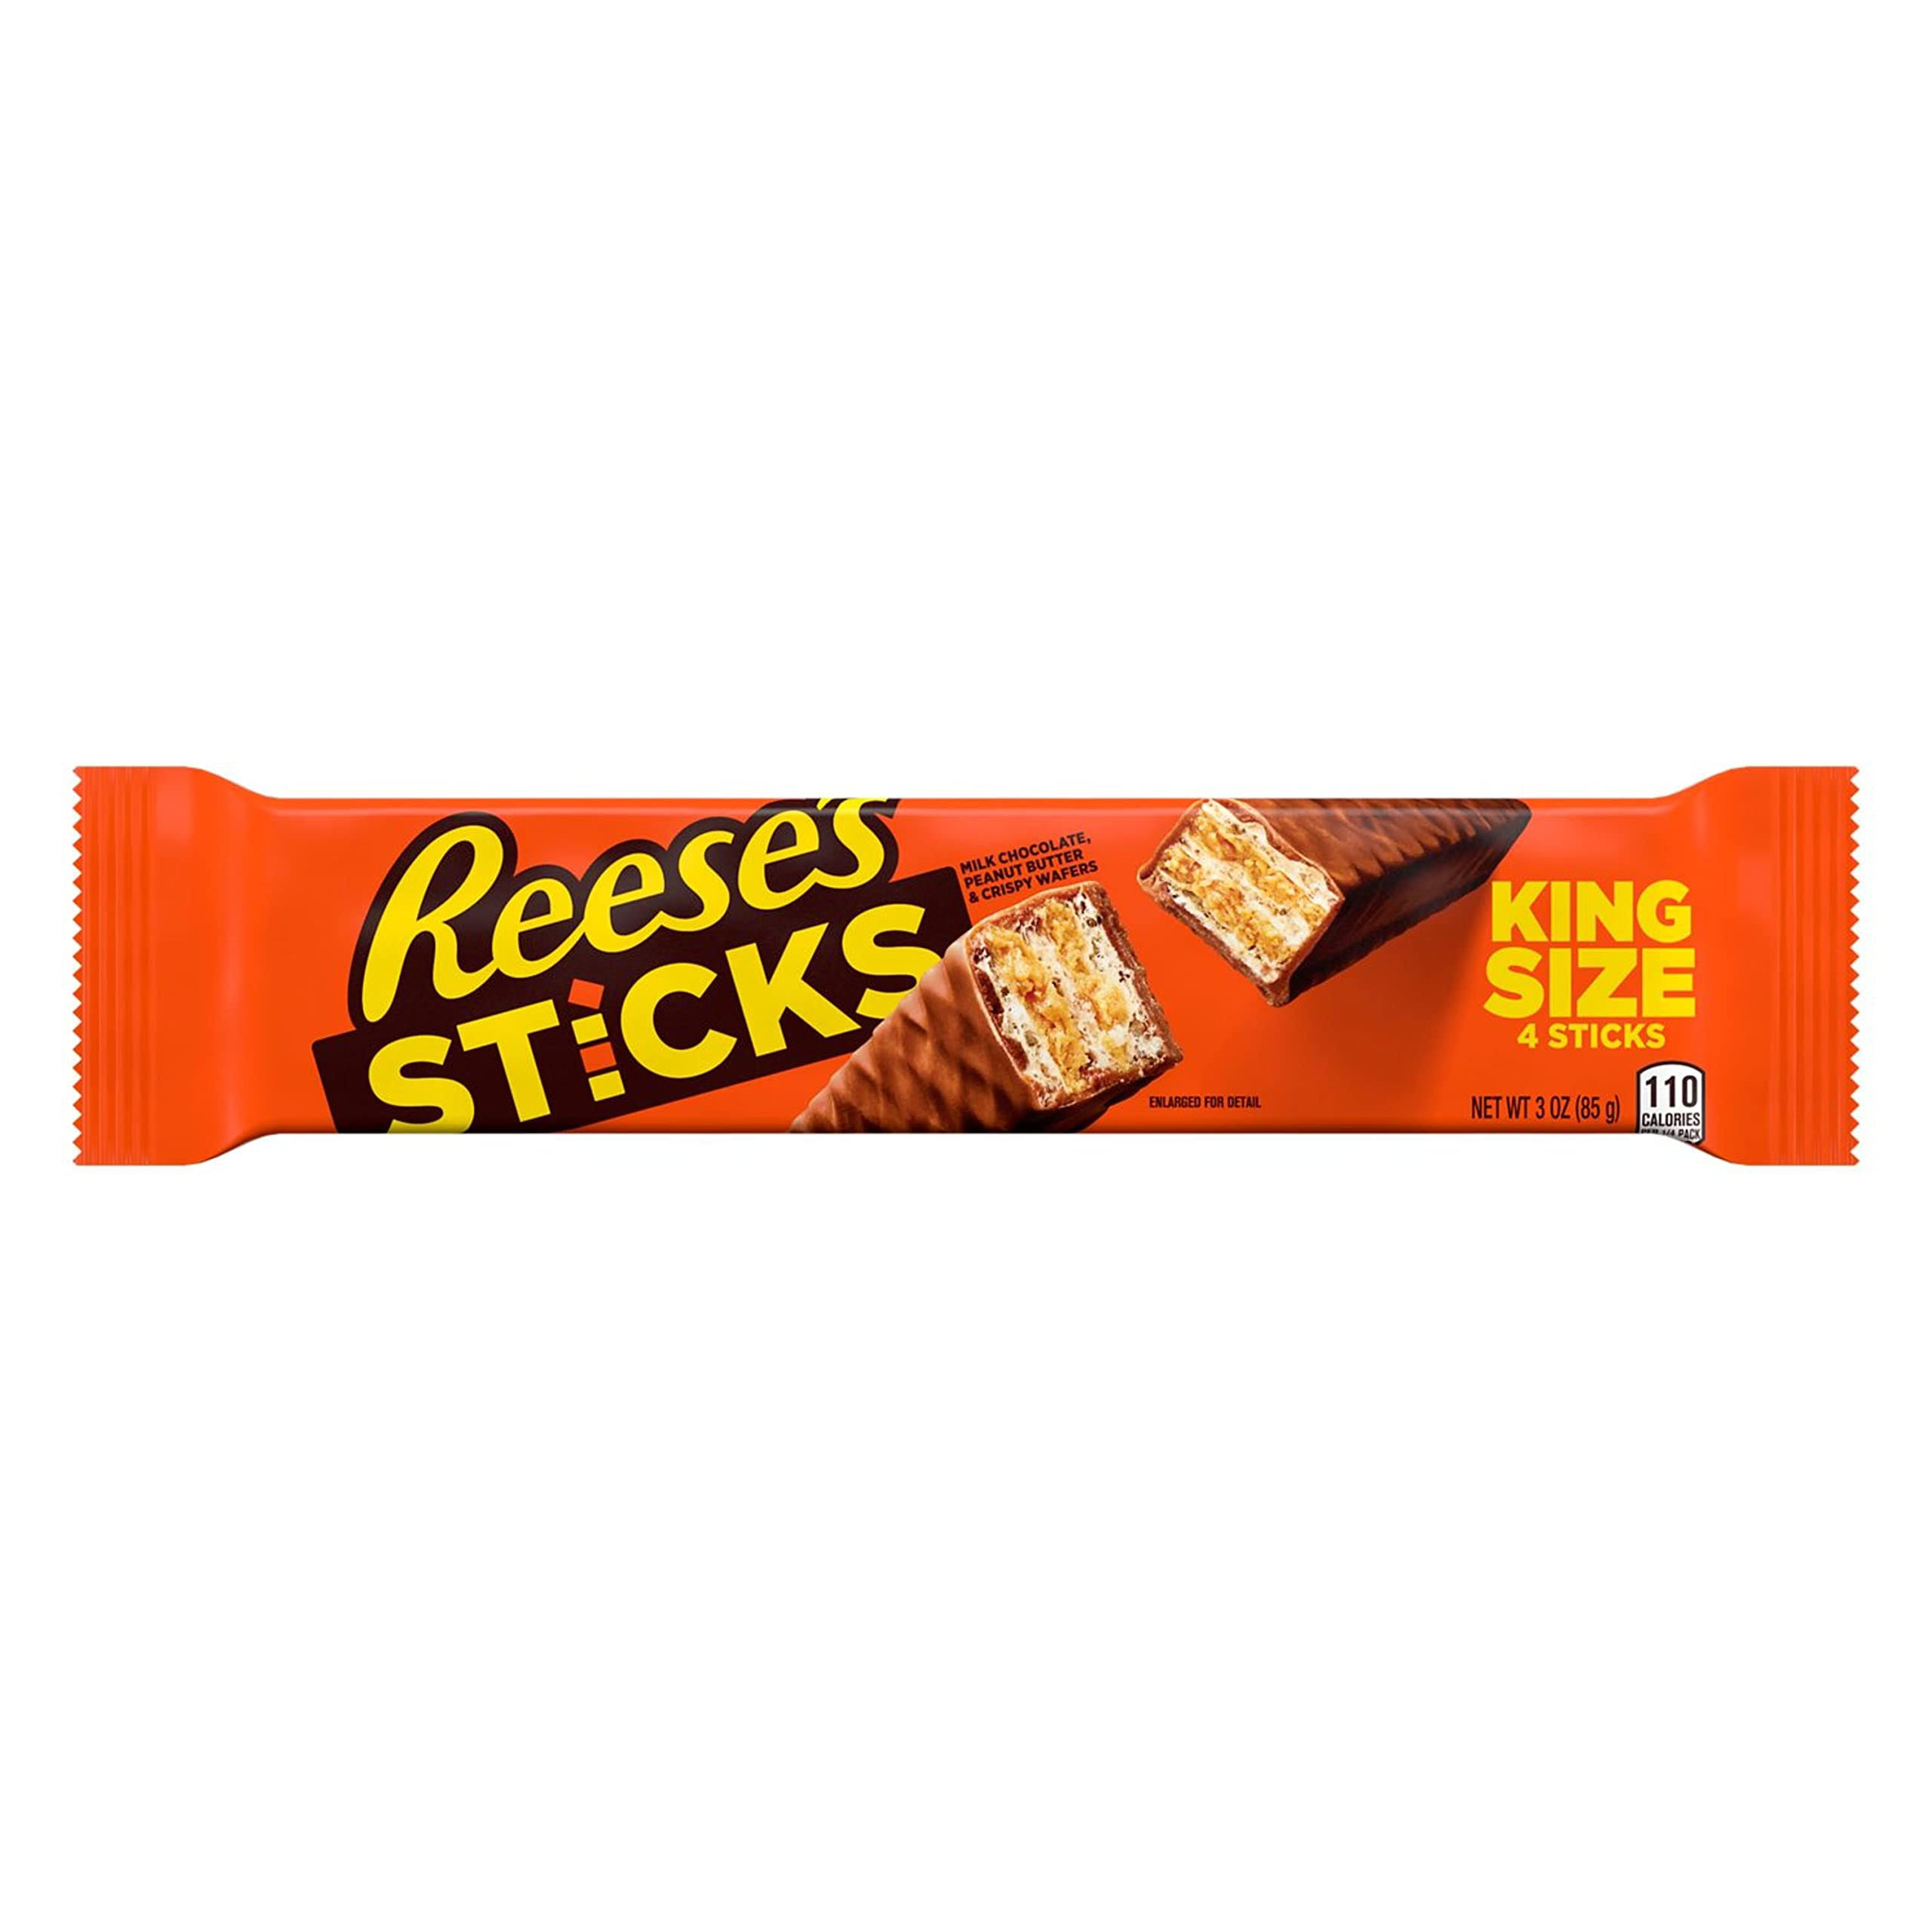 Reese's Sticks Wafer - King Size, 4 Sticks, 85g